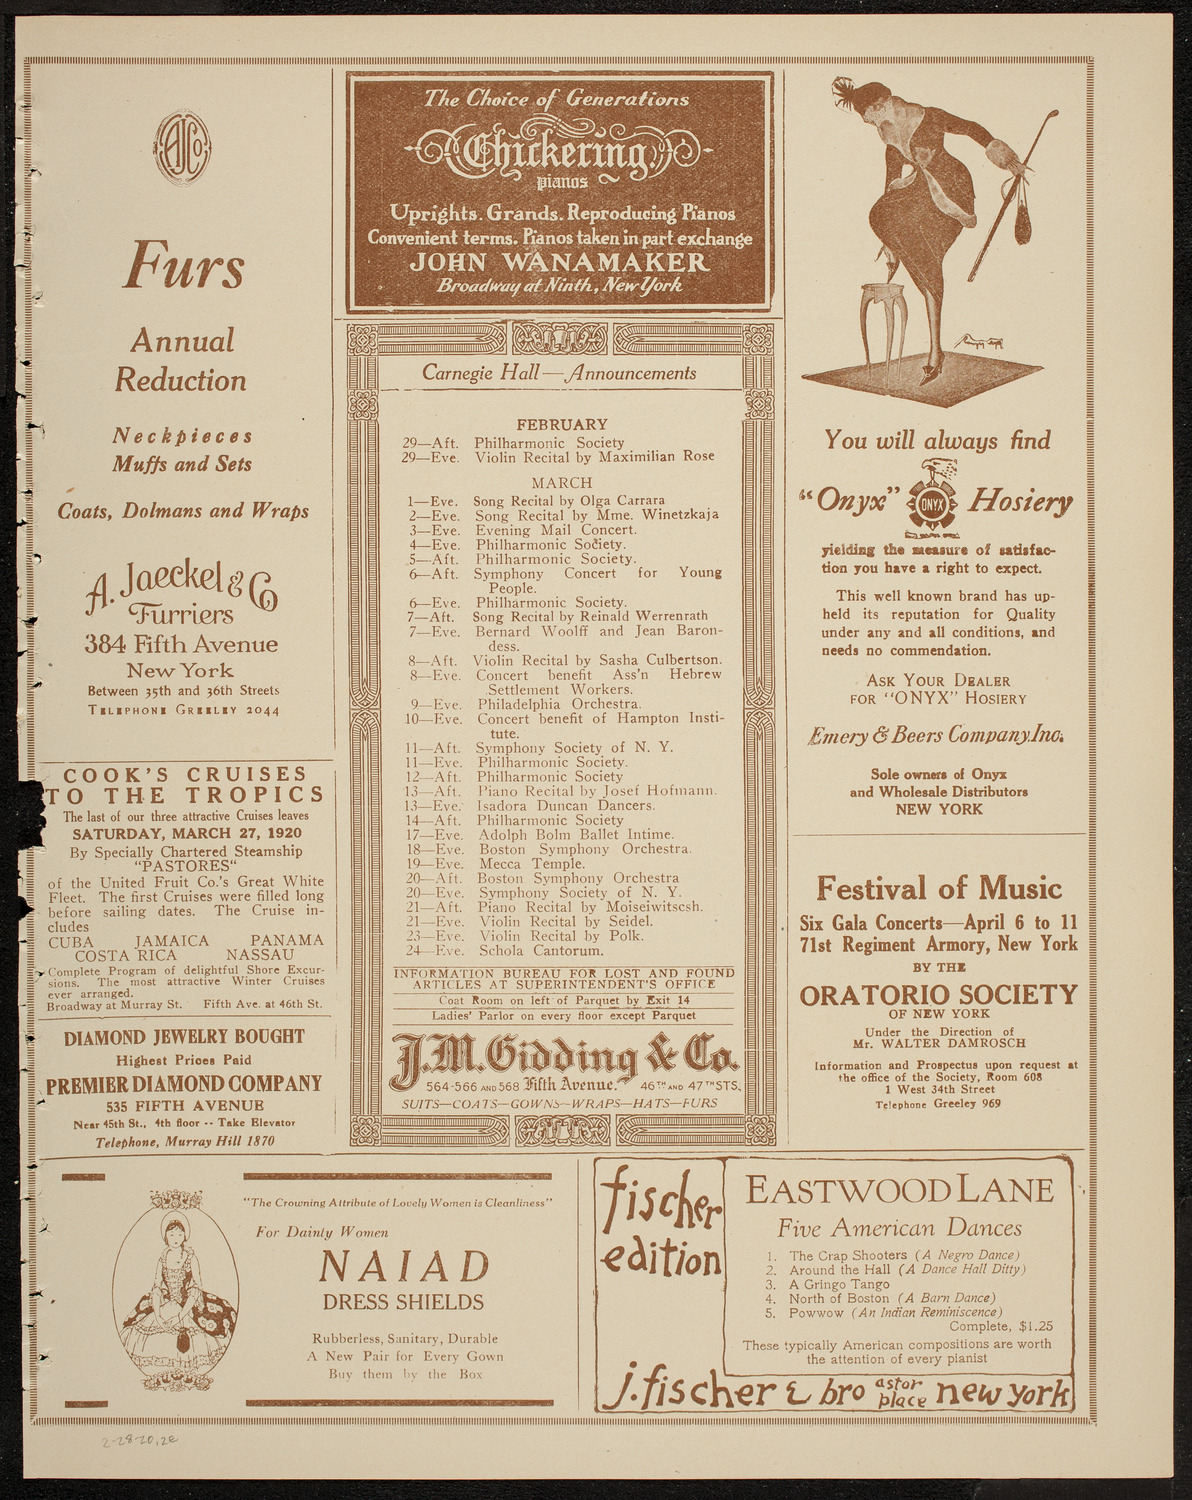 Mecca Temple: Ladies' Night, February 28, 1920, program page 3